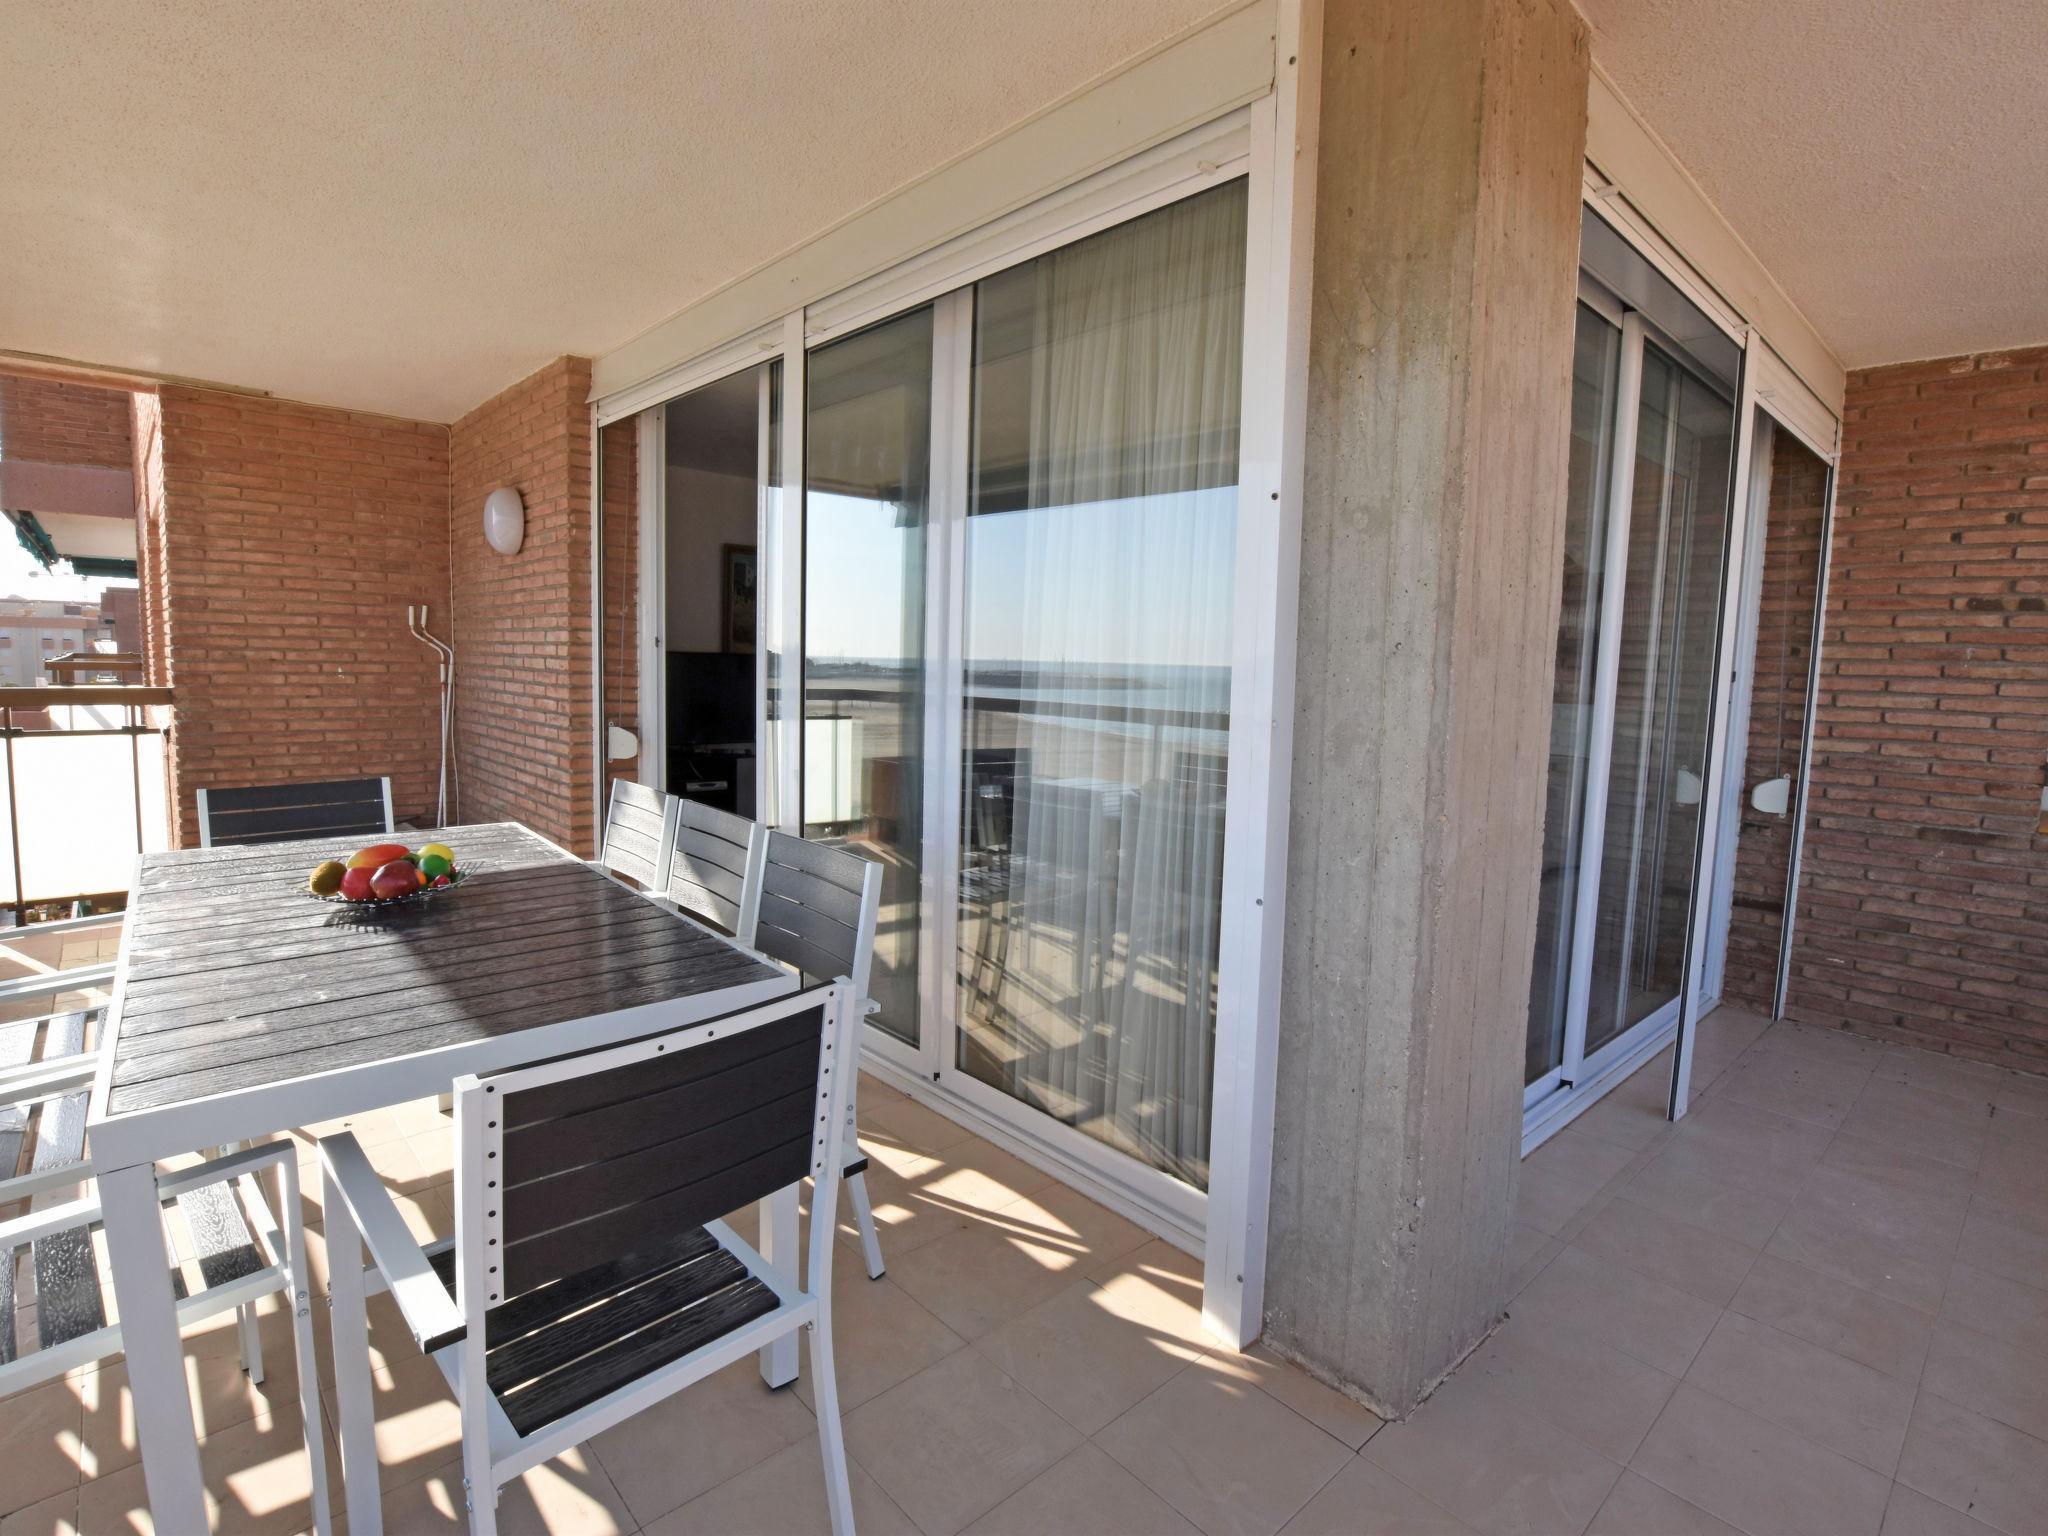 Photo 33 - Appartement de 4 chambres à Torredembarra avec piscine et vues à la mer